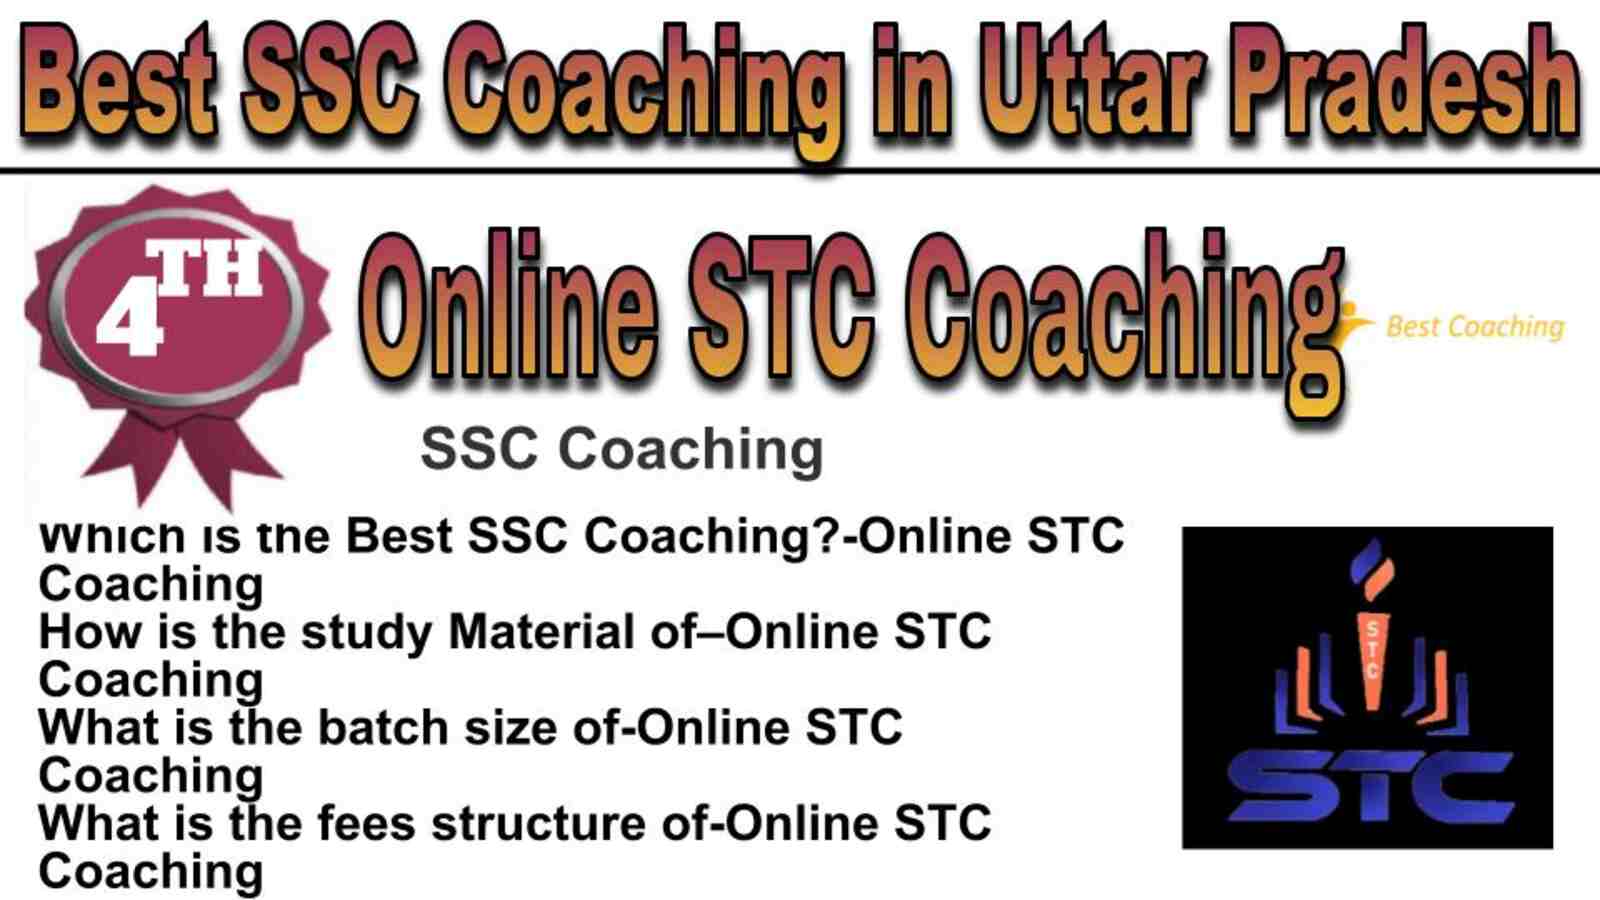 Rank 4 Best SSC Coaching in Uttar Pradesh